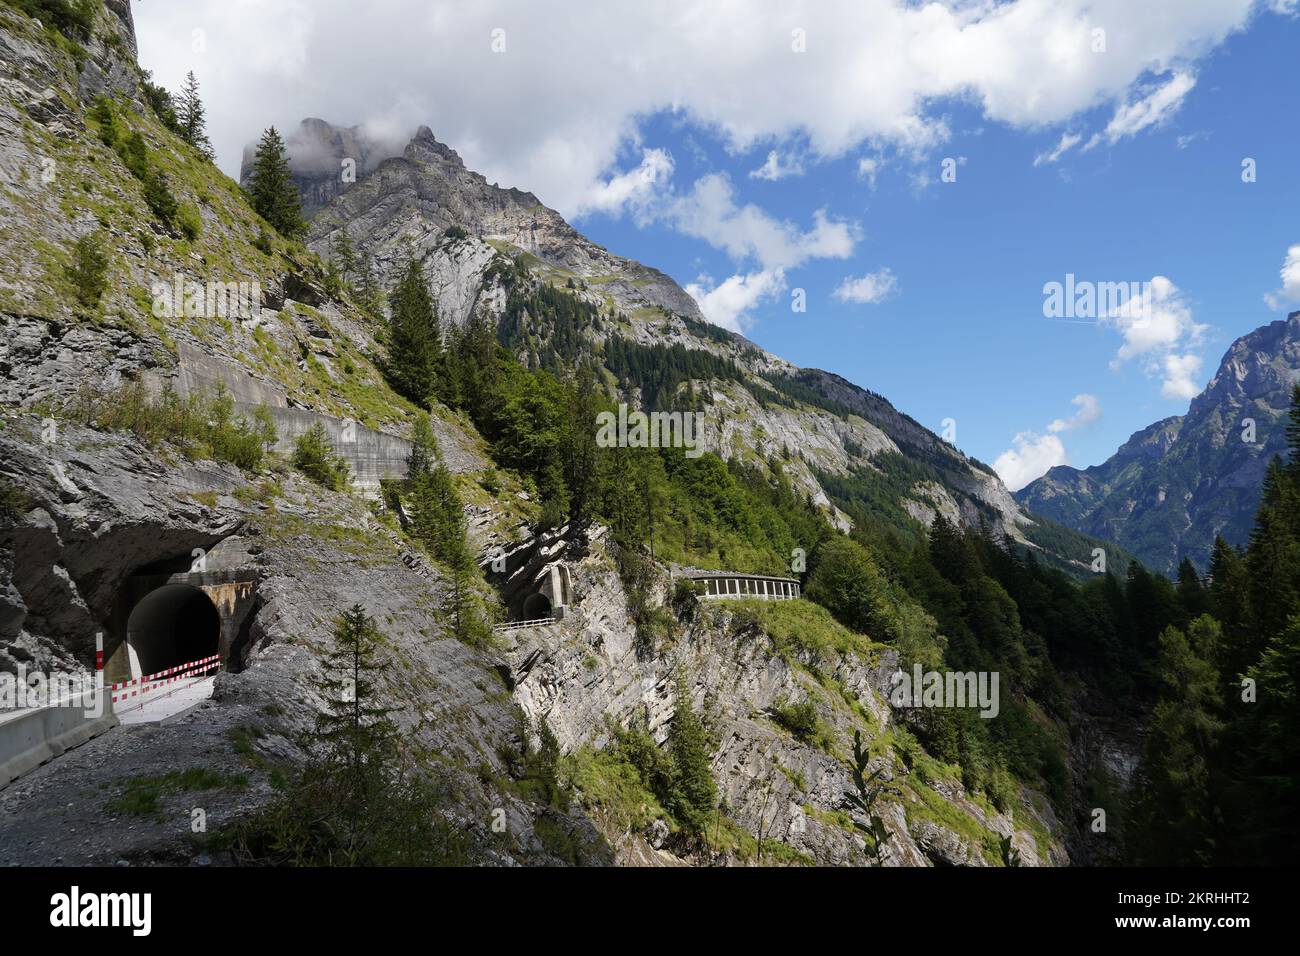 Small tunnels in the Alp mountains in canton Graubunden in Switzerland. Stock Photo